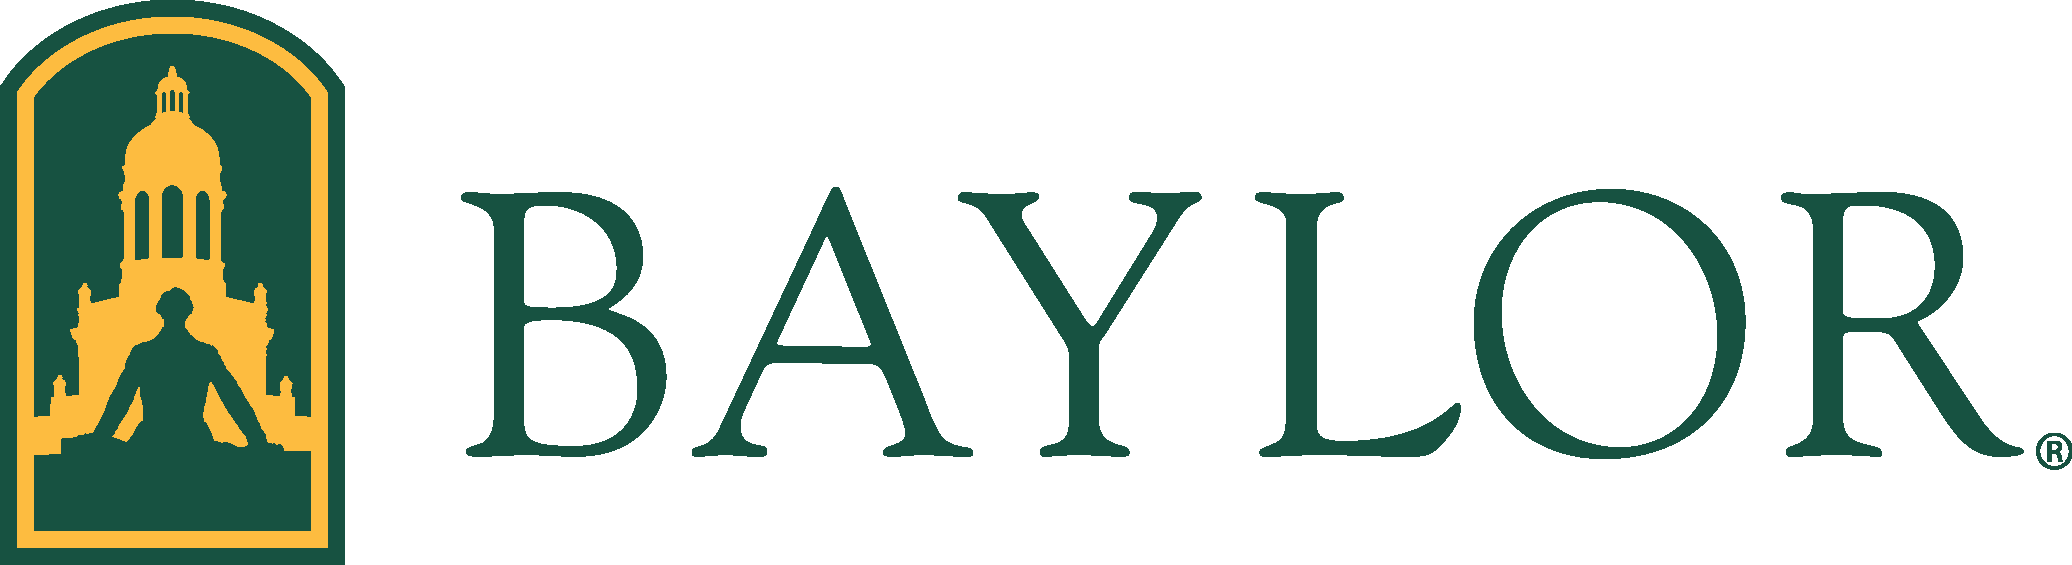 Baylor Logo - Baylor University Seal and Logos (Baylor Bears - baylor.edu) Vector ...